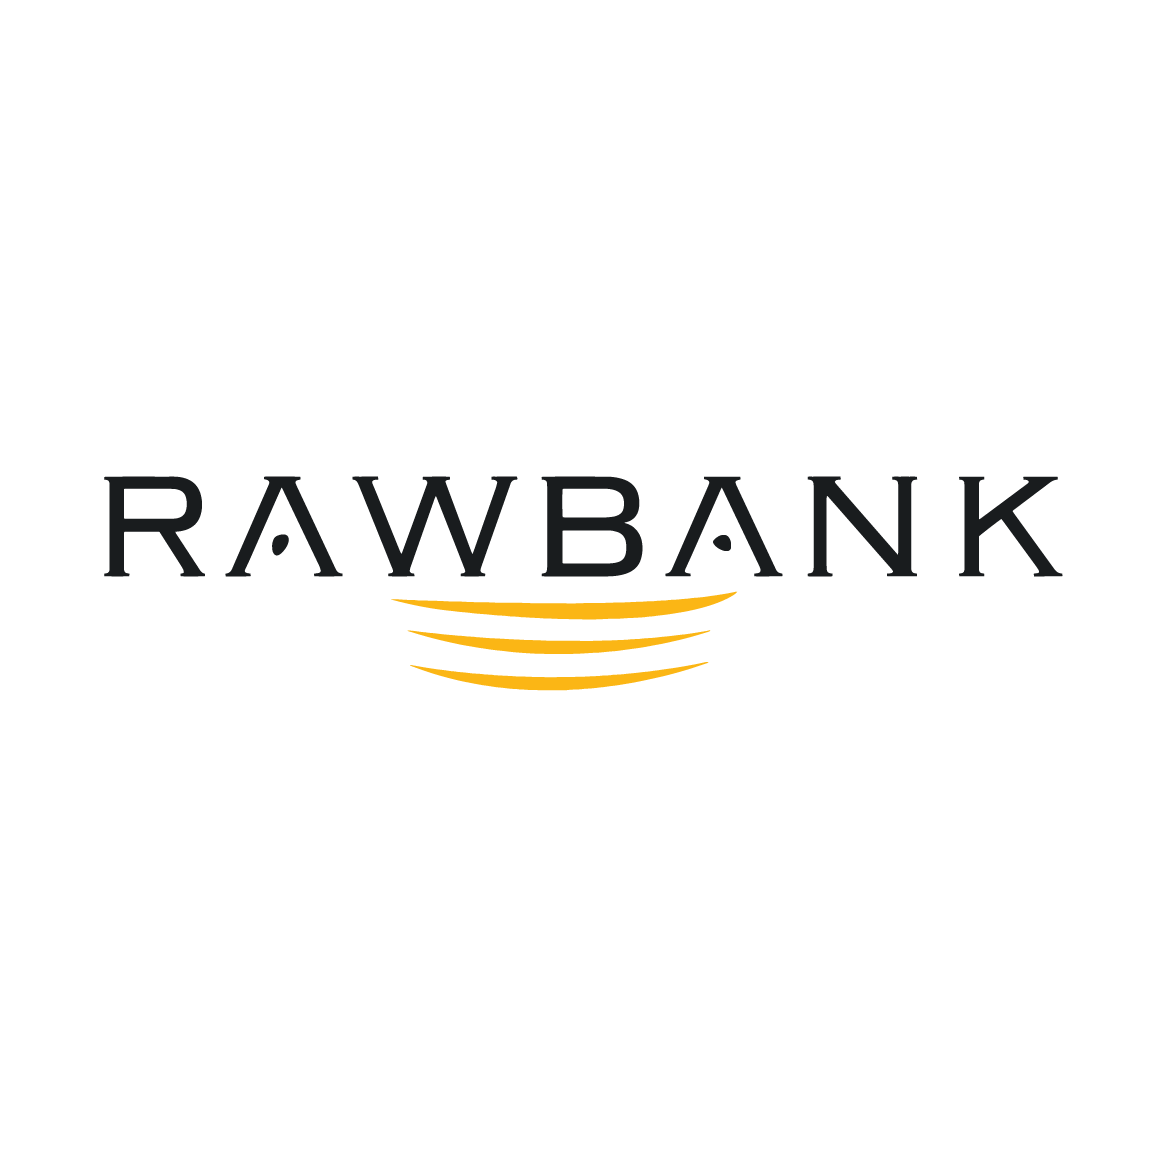 rawbank